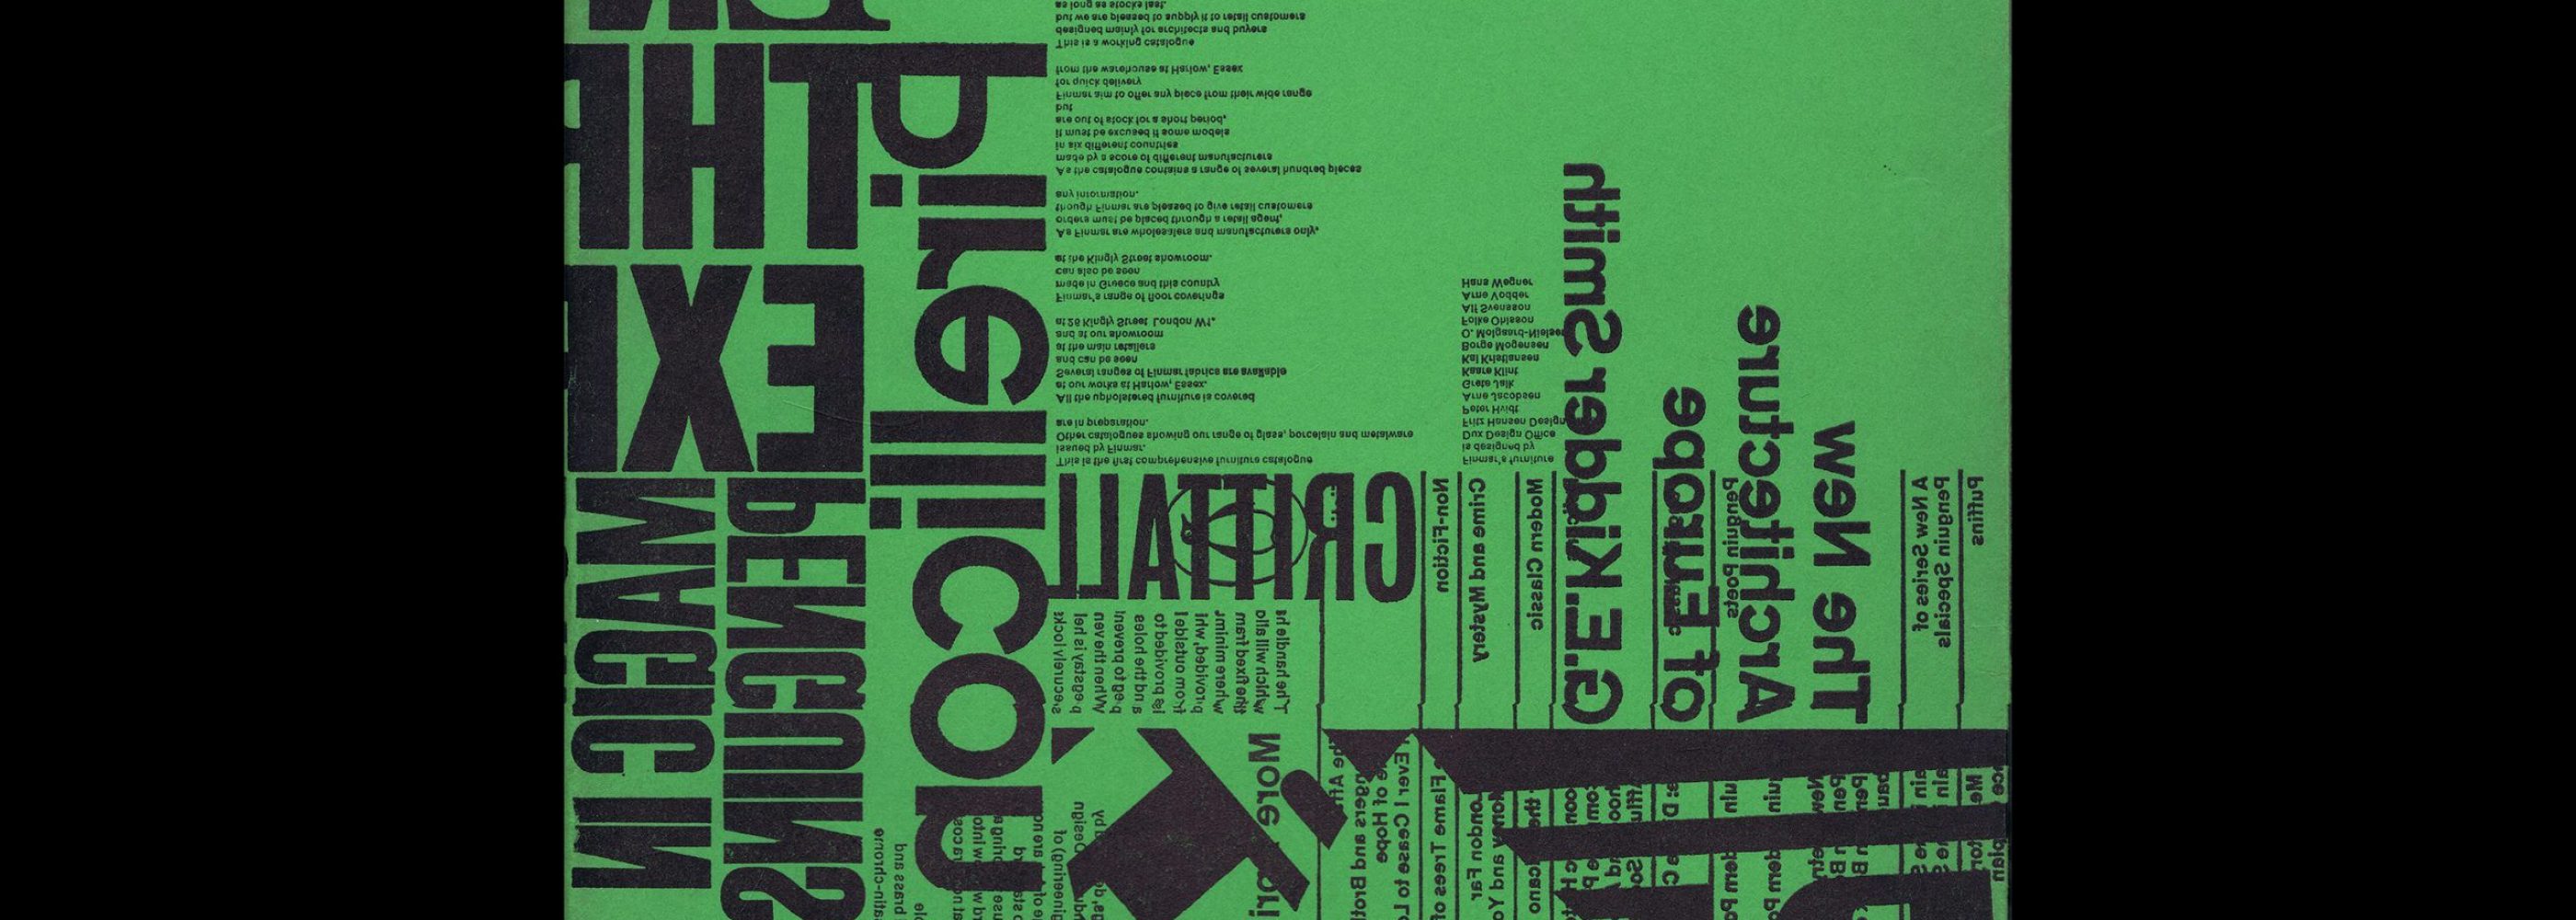 Typographica, New Series 7, 1963. Designed by Herbert Spencer